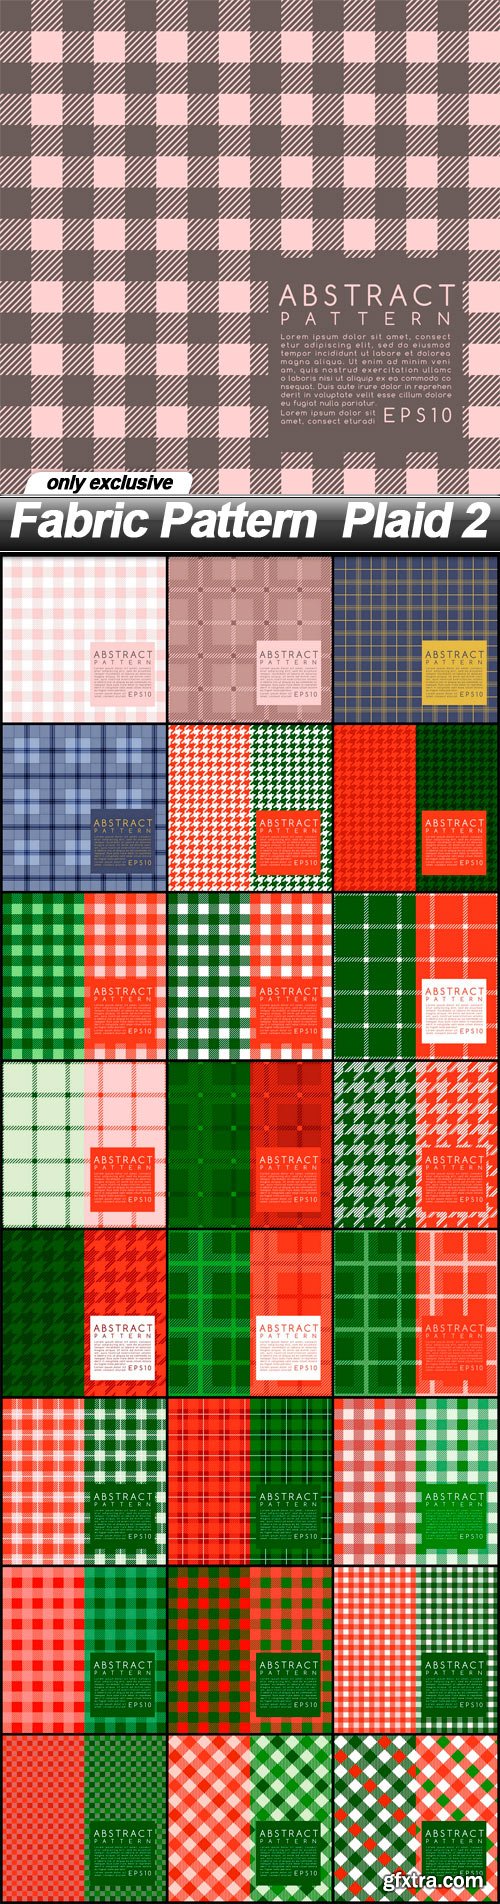 Fabric Pattern Plaid 2 - 25 EPS